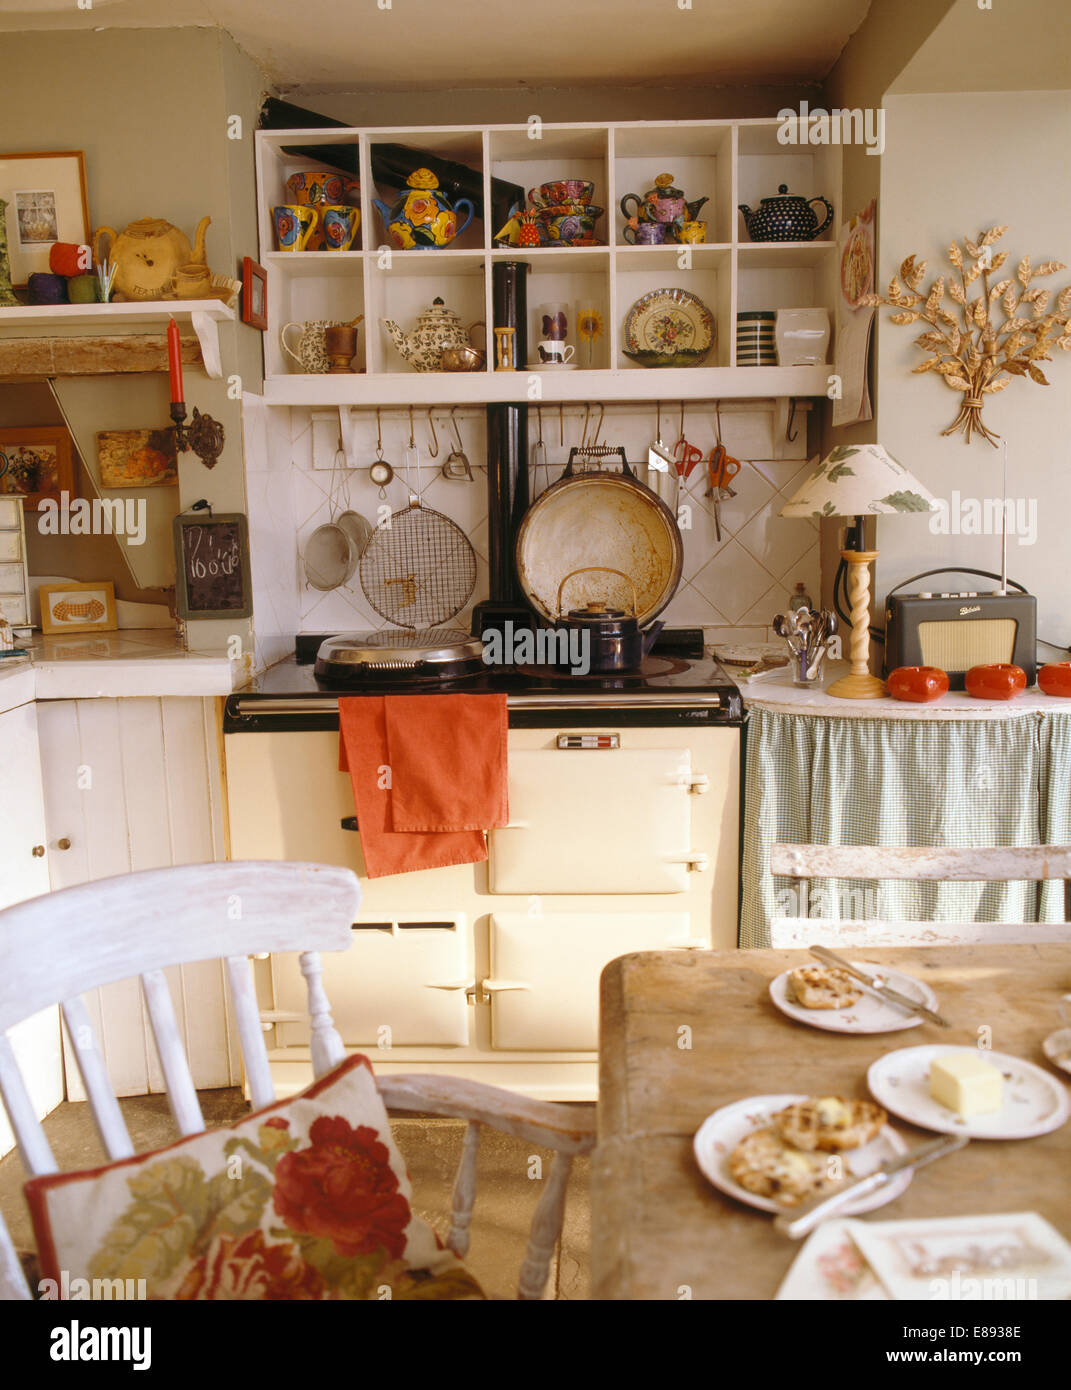 https://c8.alamy.com/comp/E8938E/cube-shelves-above-cream-aga-in-cottage-kitchen-with-white-painted-E8938E.jpg